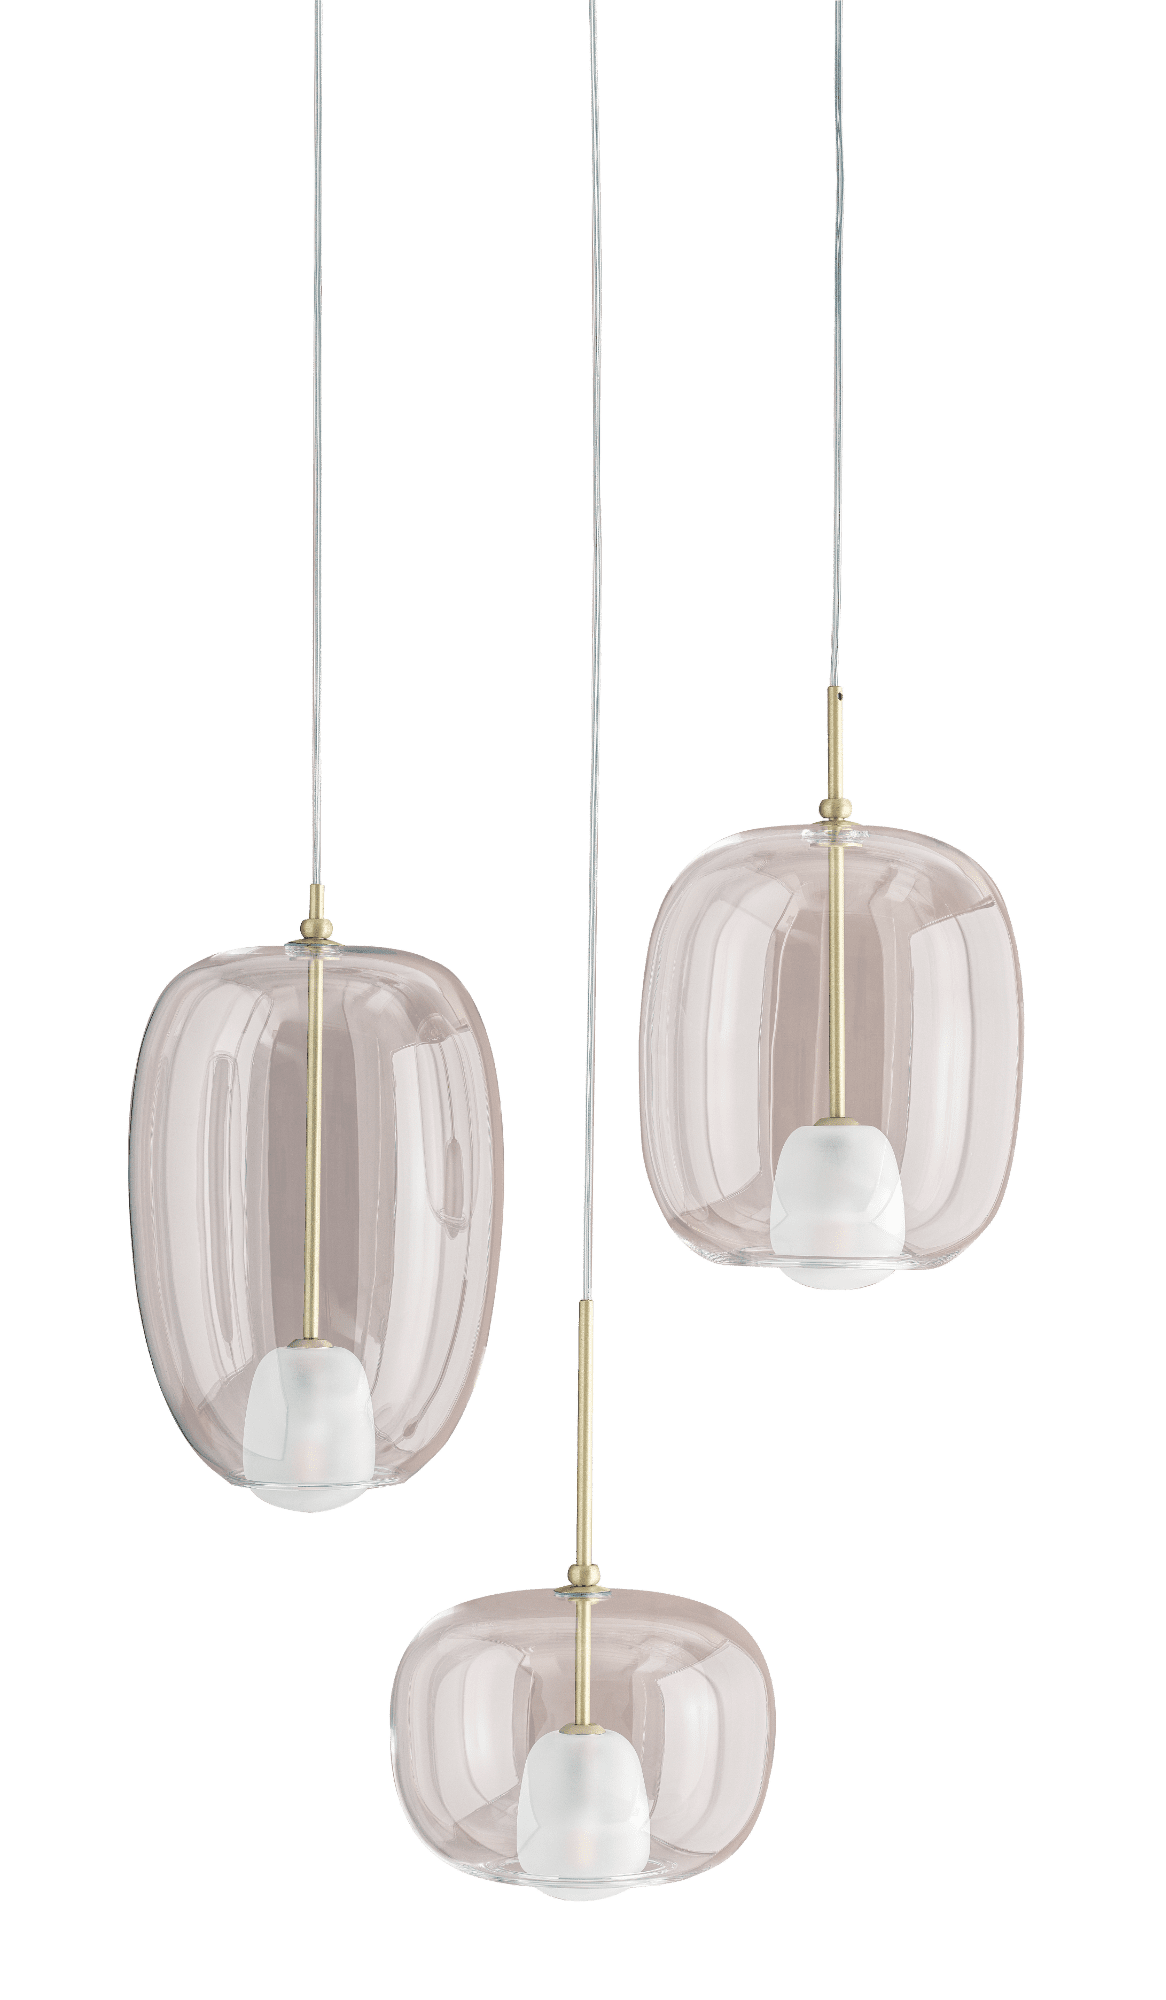 Blow Mini pendant lamp with borosilicate glass